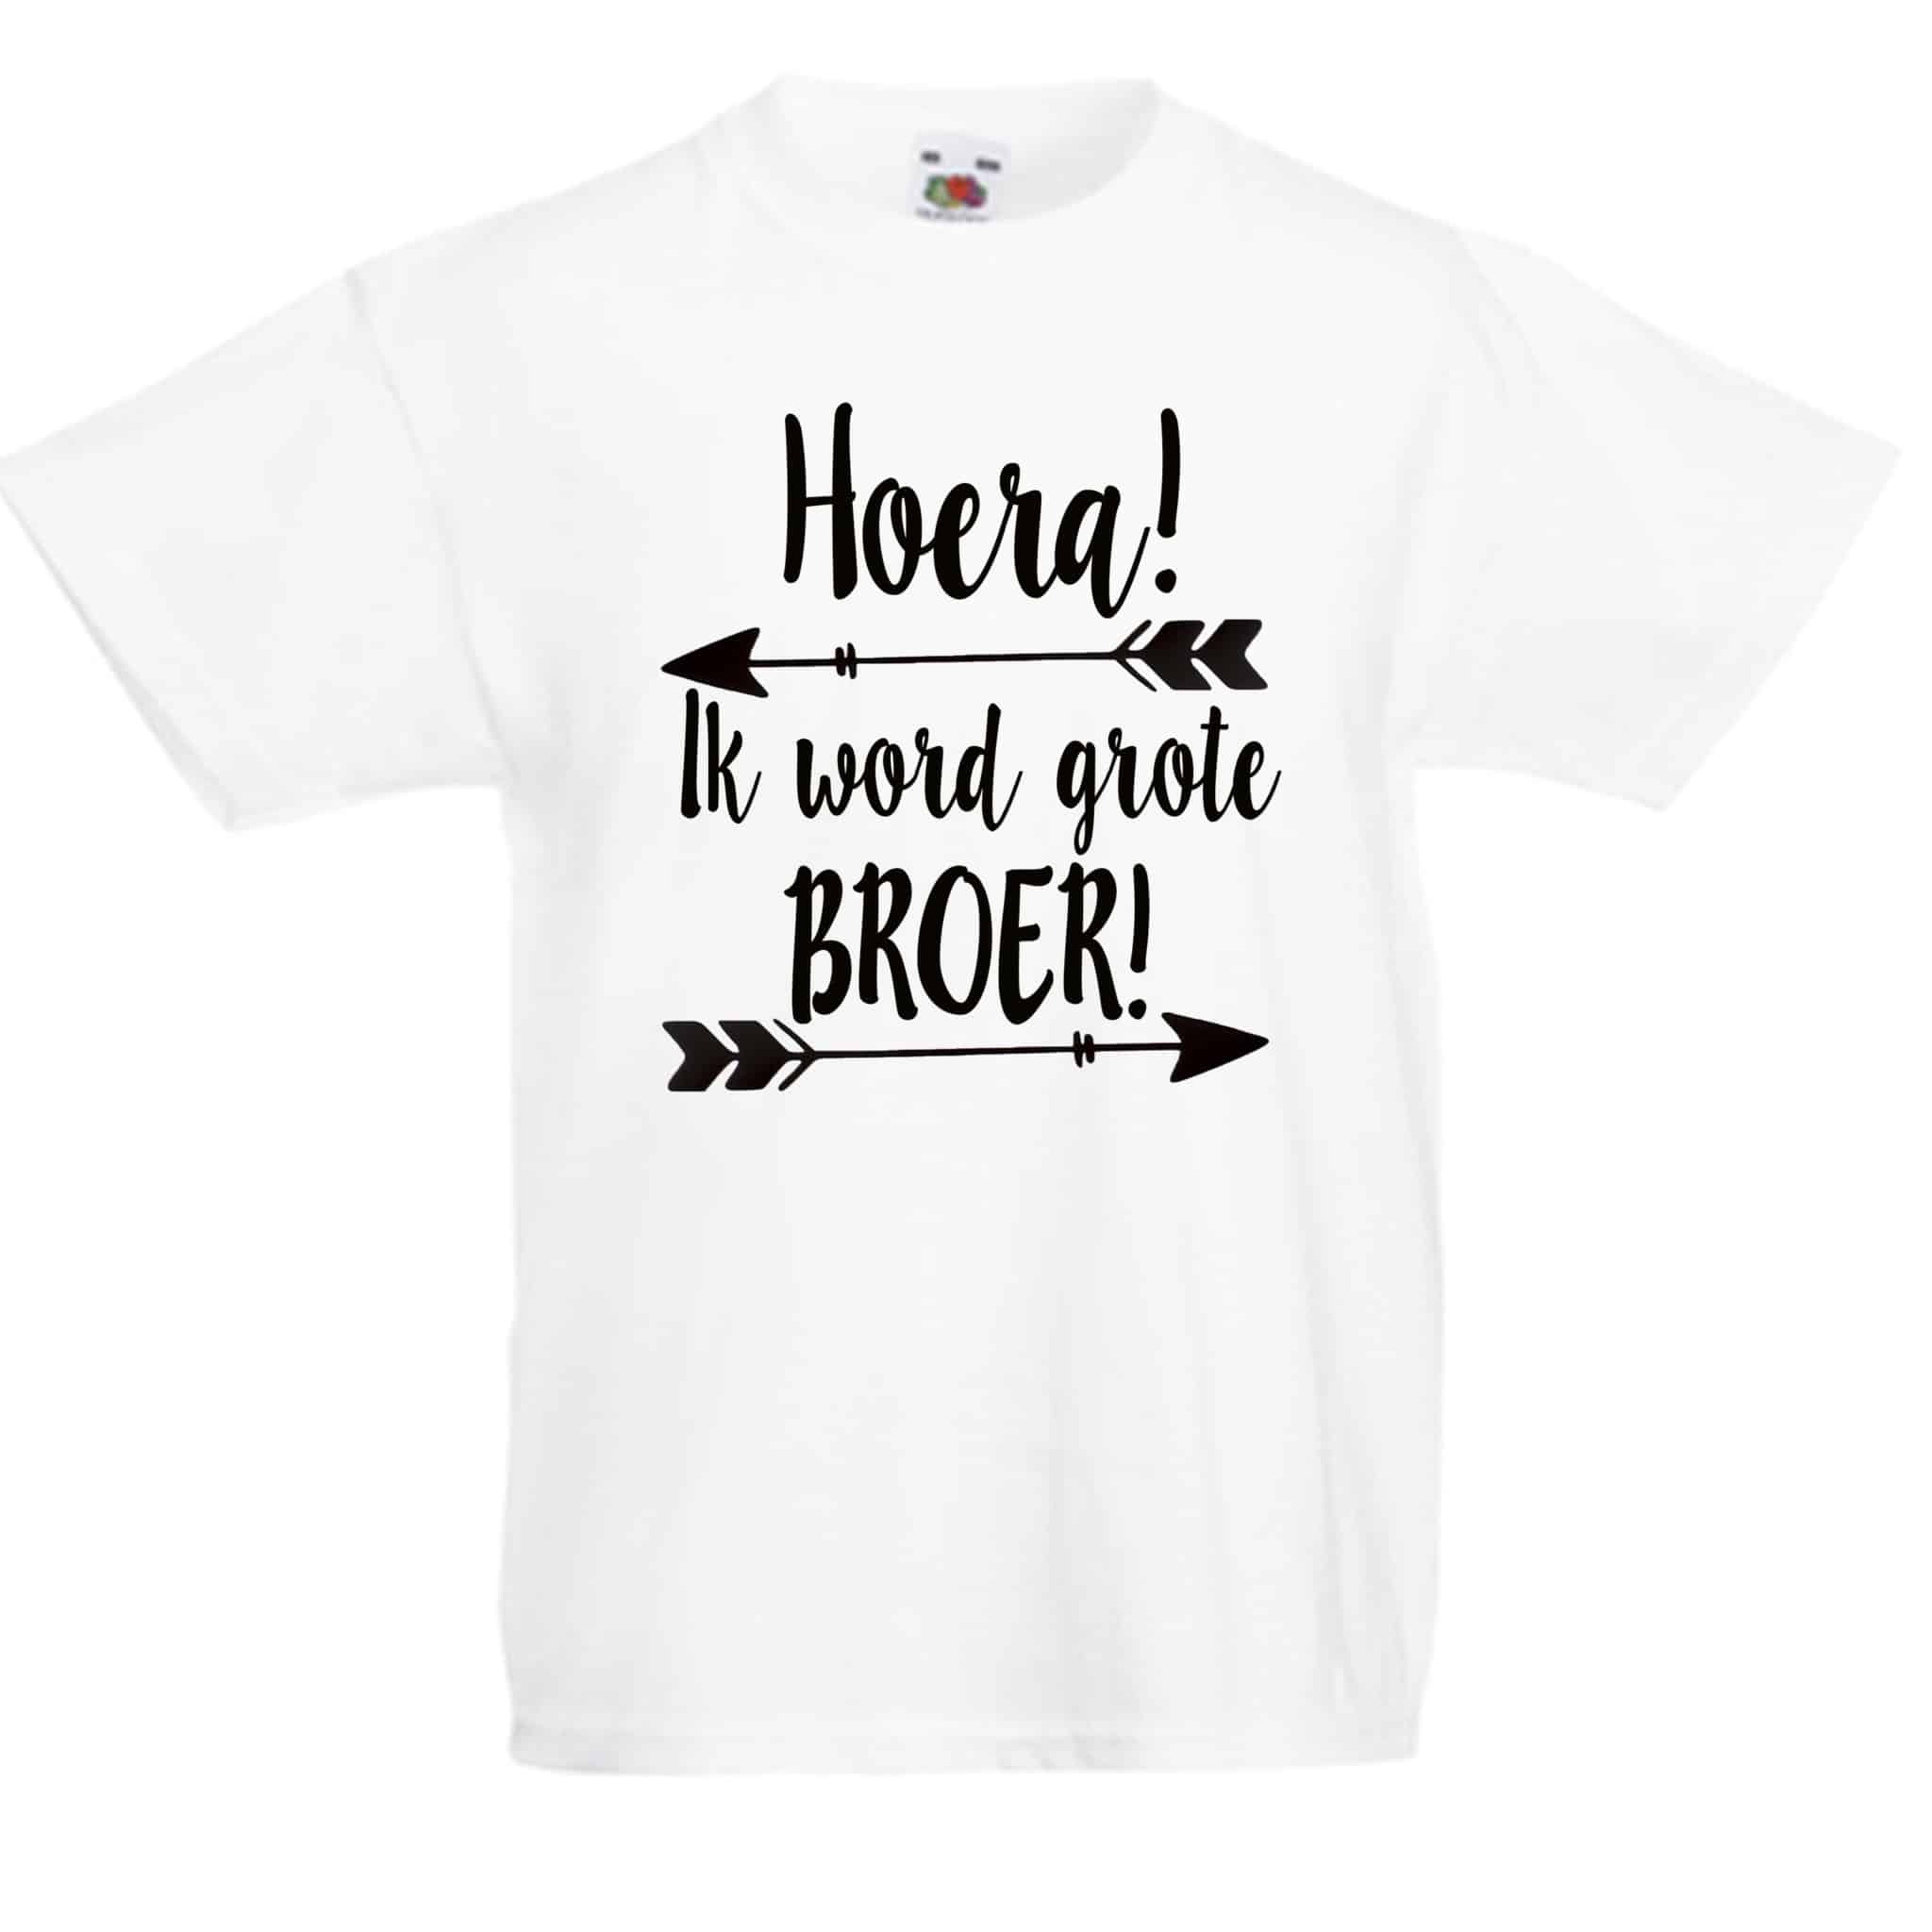 Nieuw Grote broer t-shirt kopen? - Zwanger? Lieve Labels.nl YI-04